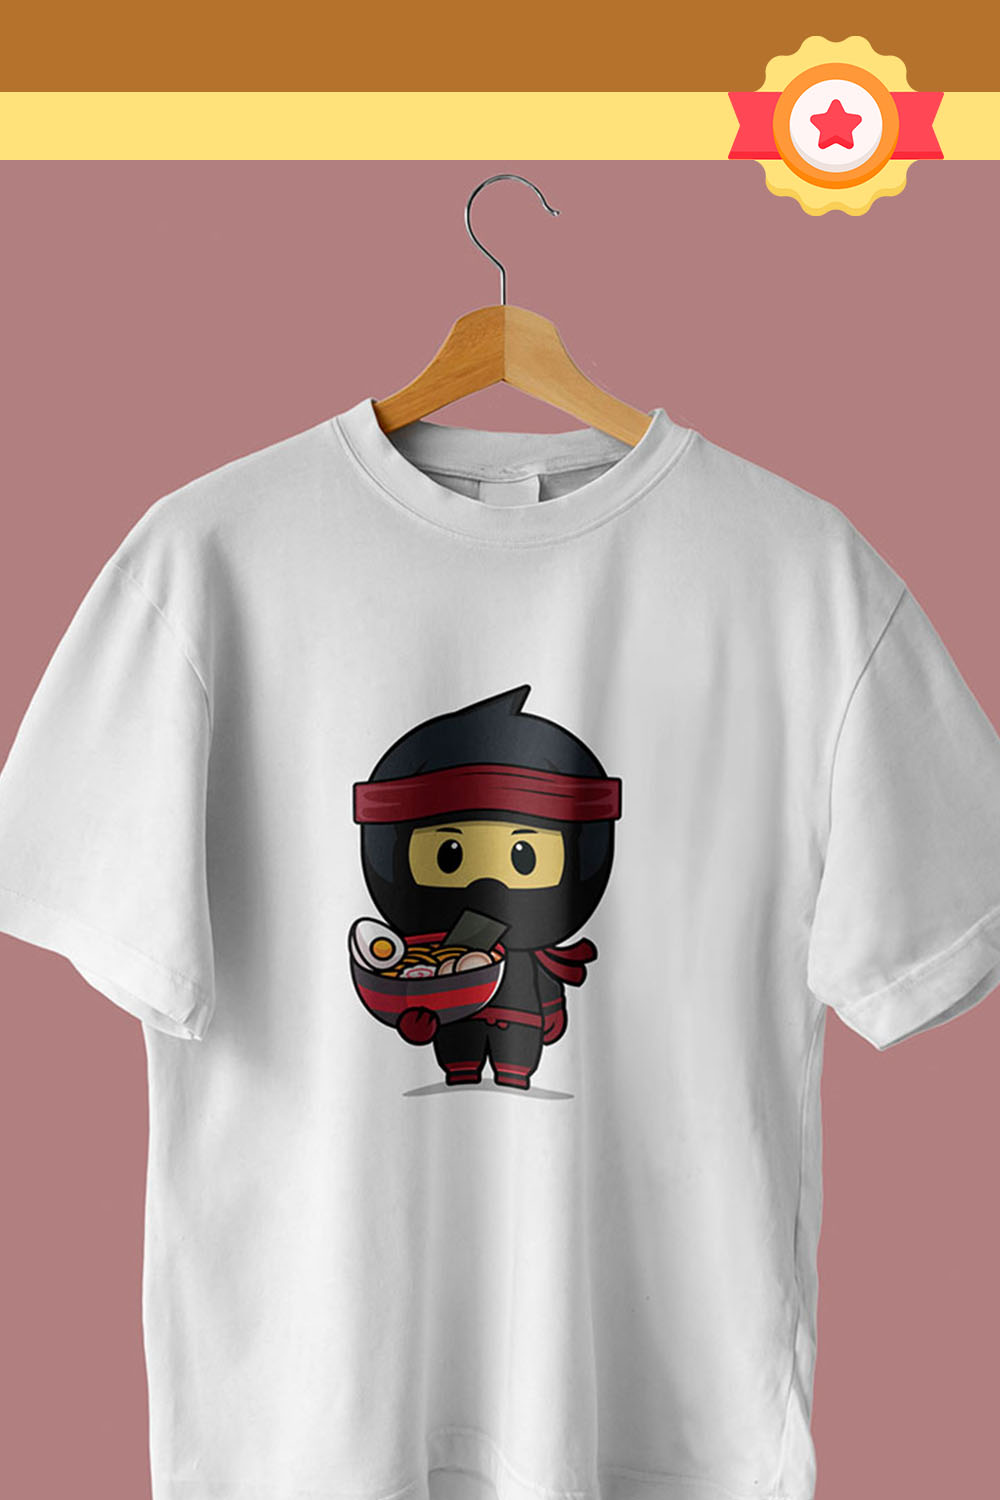 T-shirt Design Cute Ninja Illustration pinterest image.